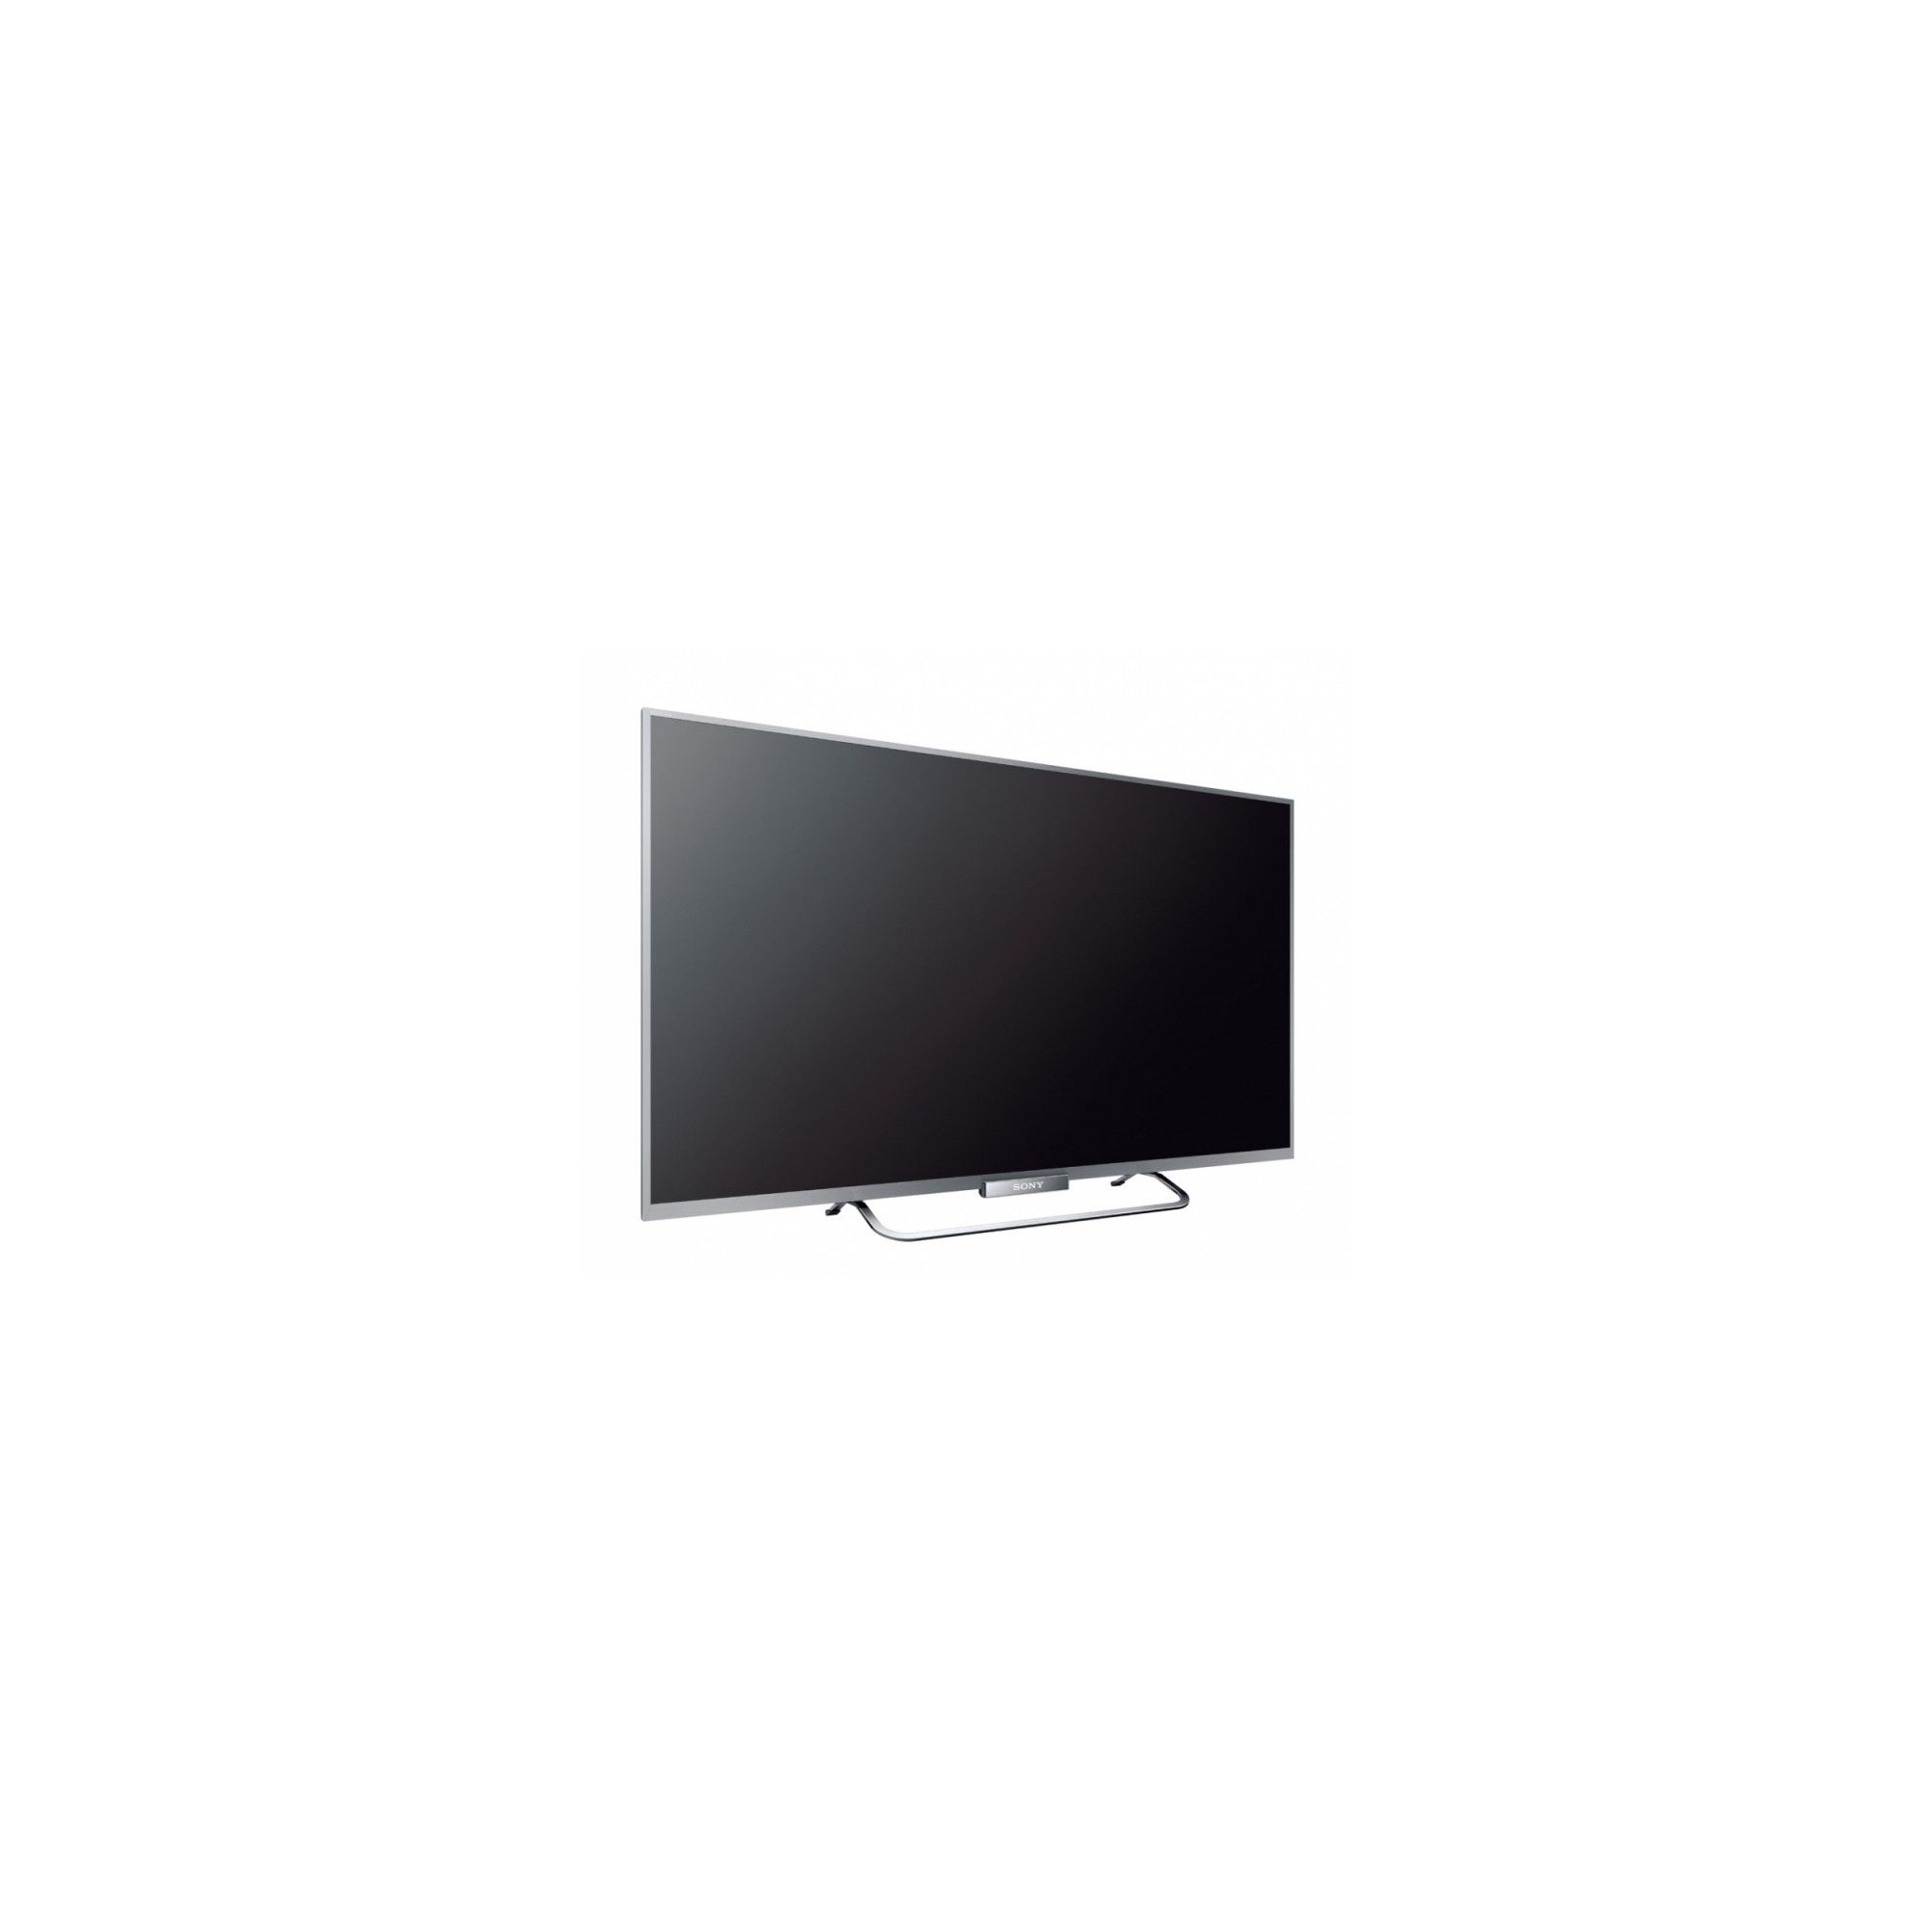 Sony KDL42W654 42 Inch Full HD 1080P LED Smart TV